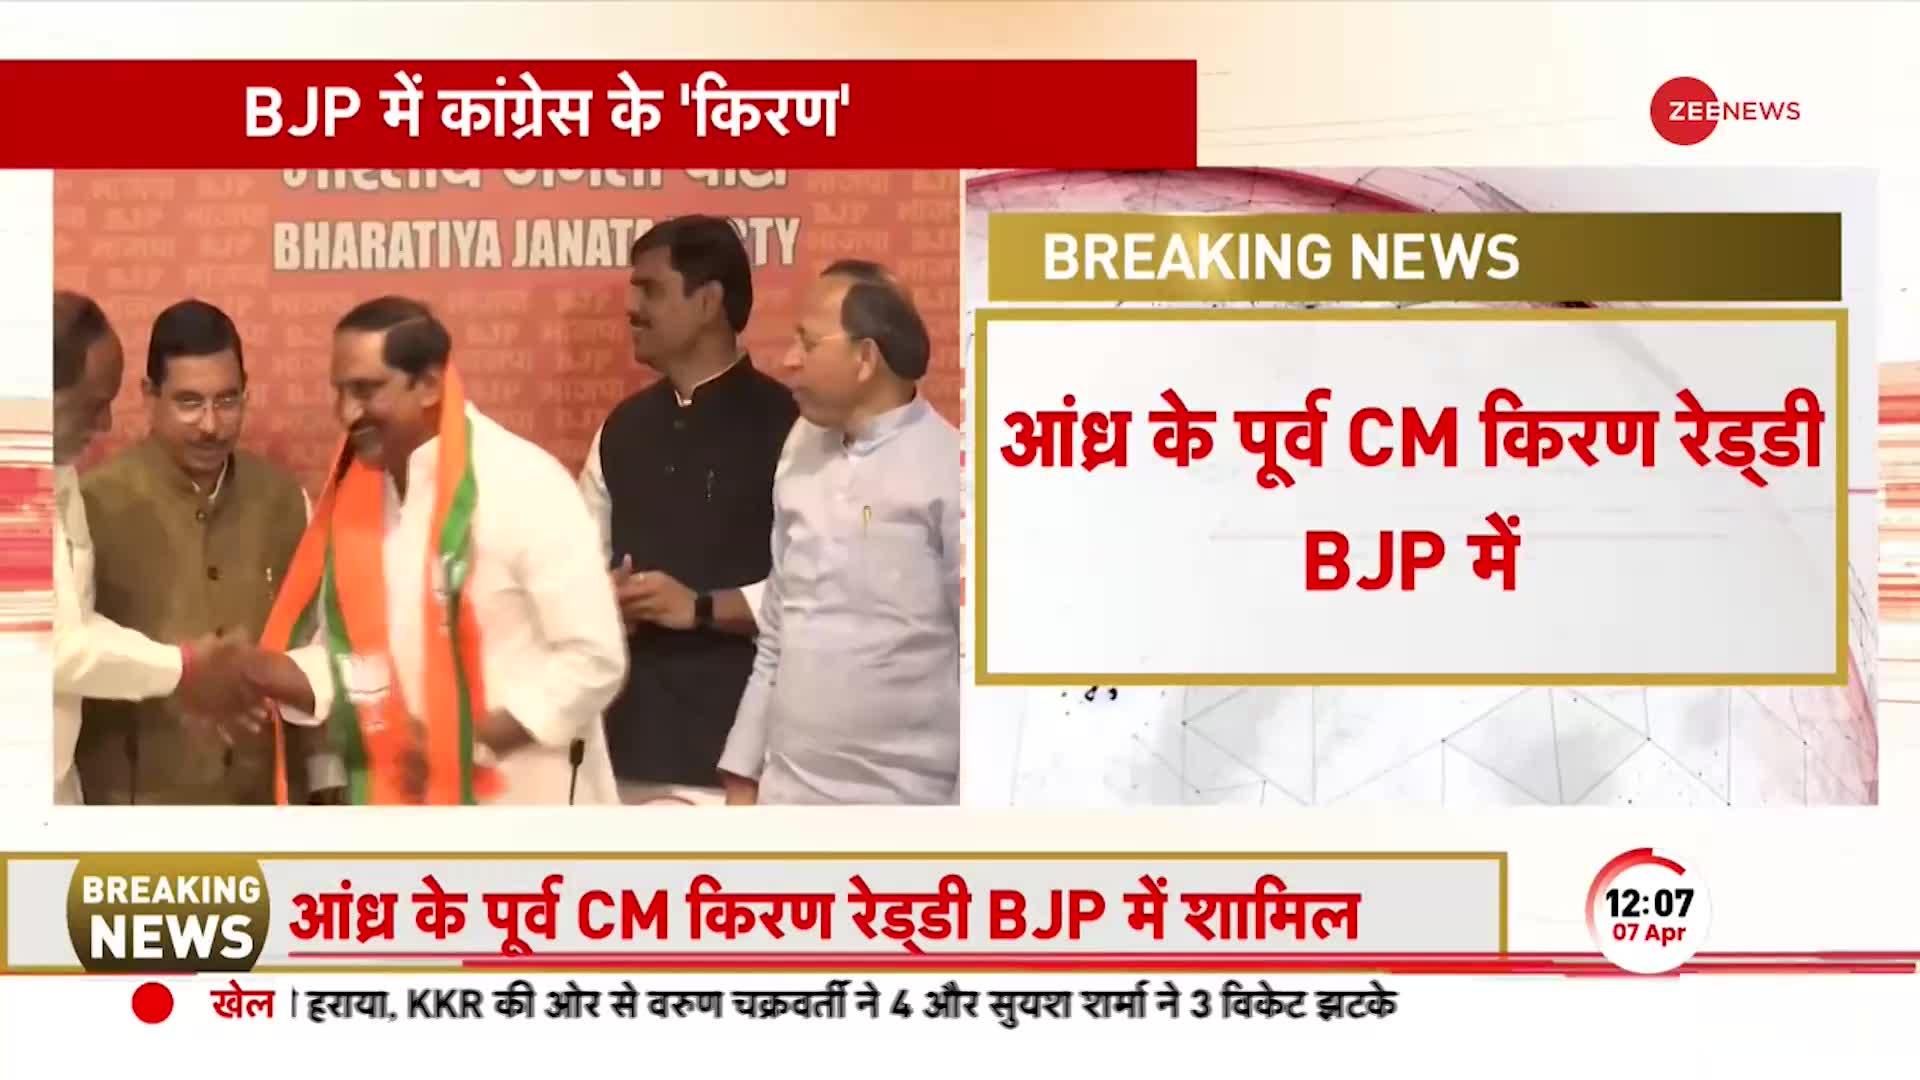 Kiran Reddy Joins BJP: Congress छोड़कर बीजेपी में शामिल हुए Andhra Pradesh के पूर्व CM किरण रेड्डी